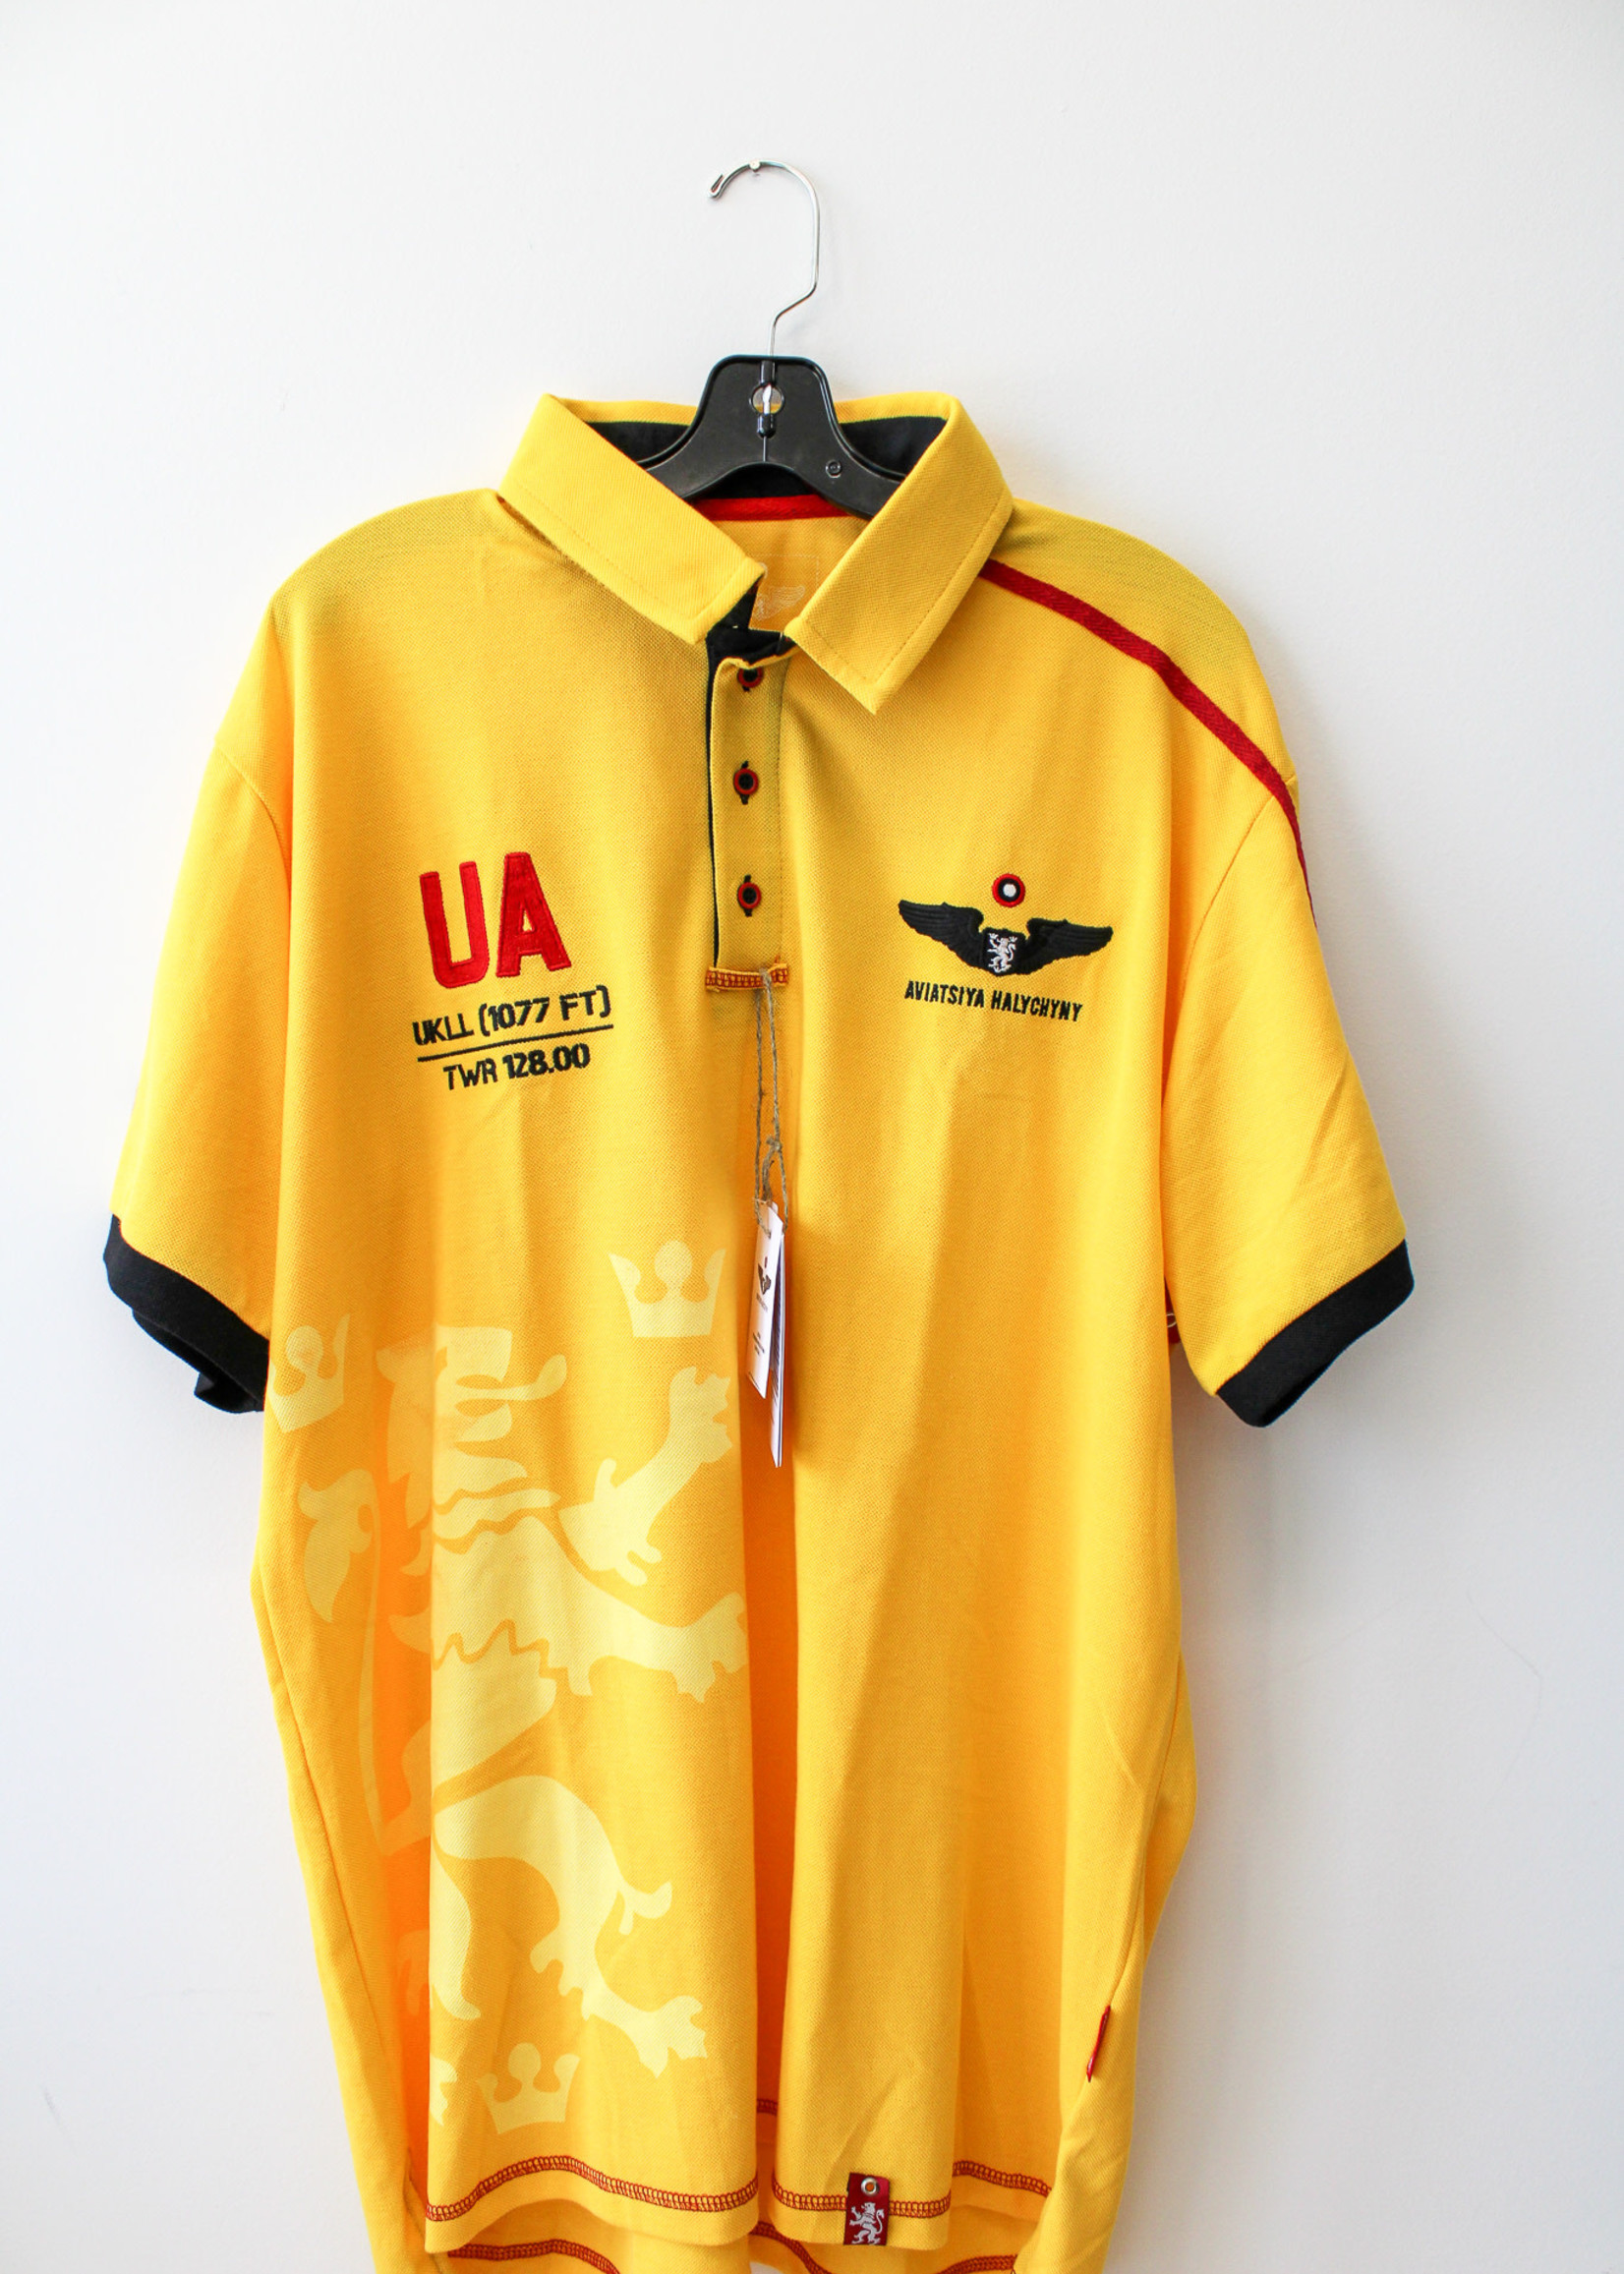 APPAREL - (M) POLO - Yellow, "UA", Short Sleeve